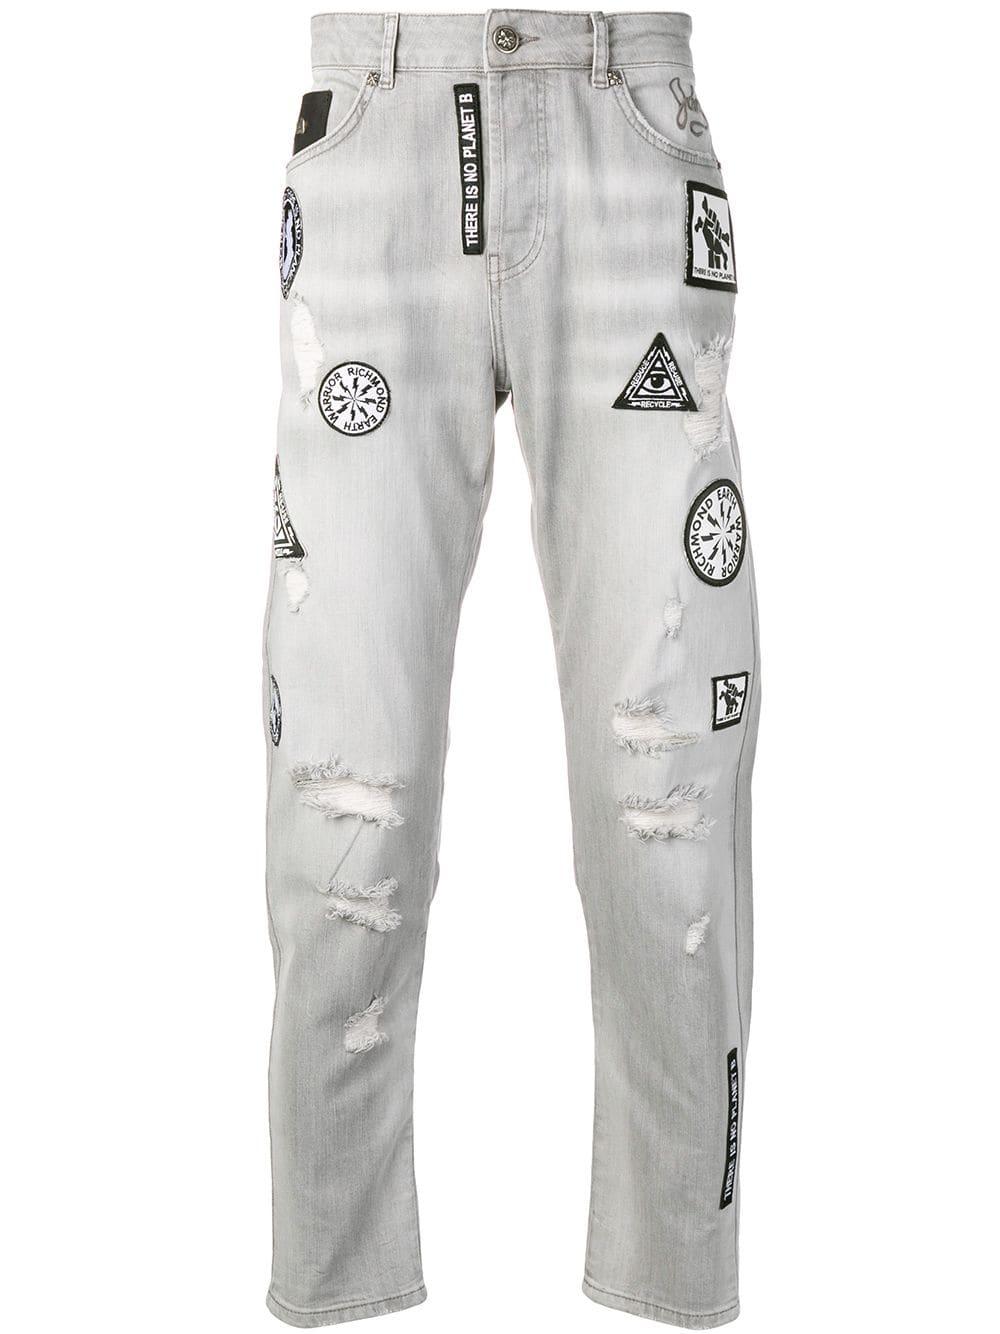 John Richmond Denim Patchwork Jeans in Grey (Gray) for Men - Lyst